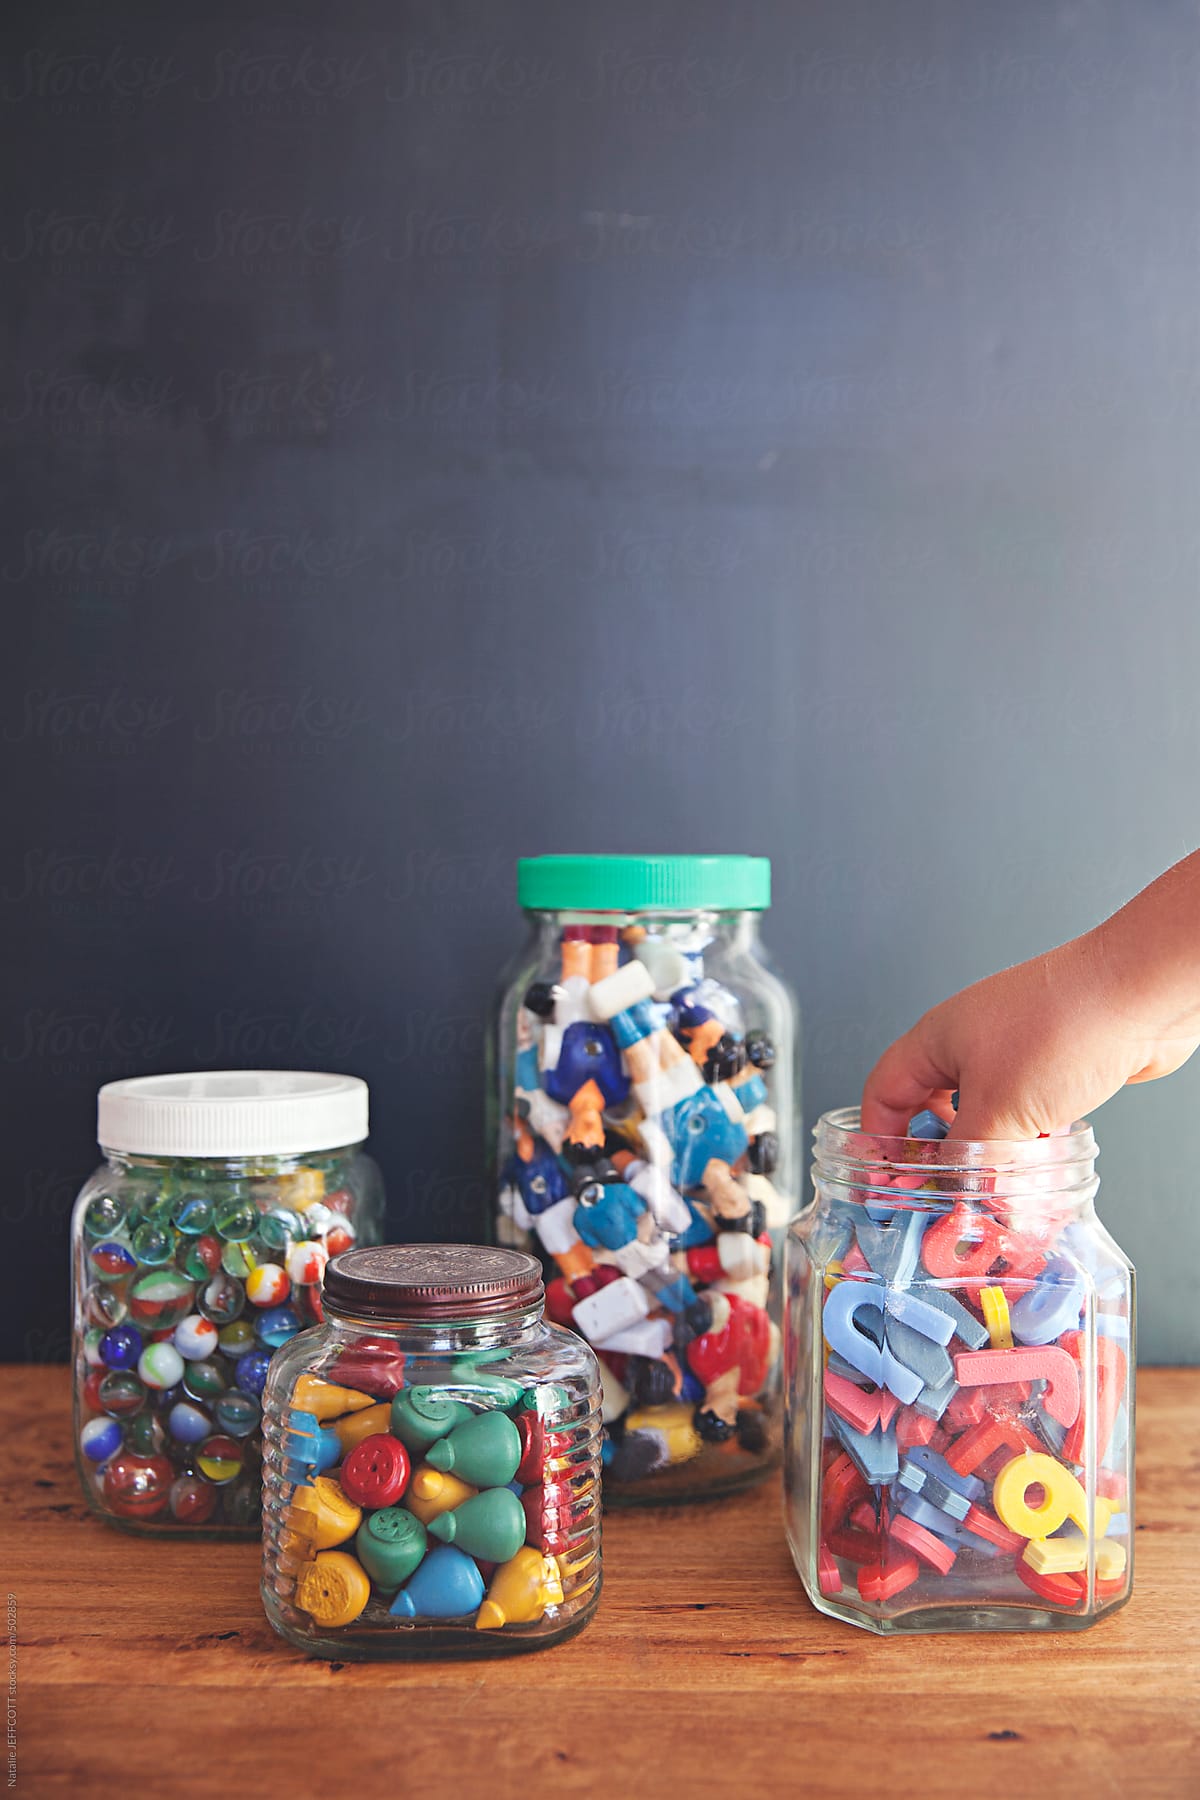 a collection of vintage toys arranged in jars on a desktop